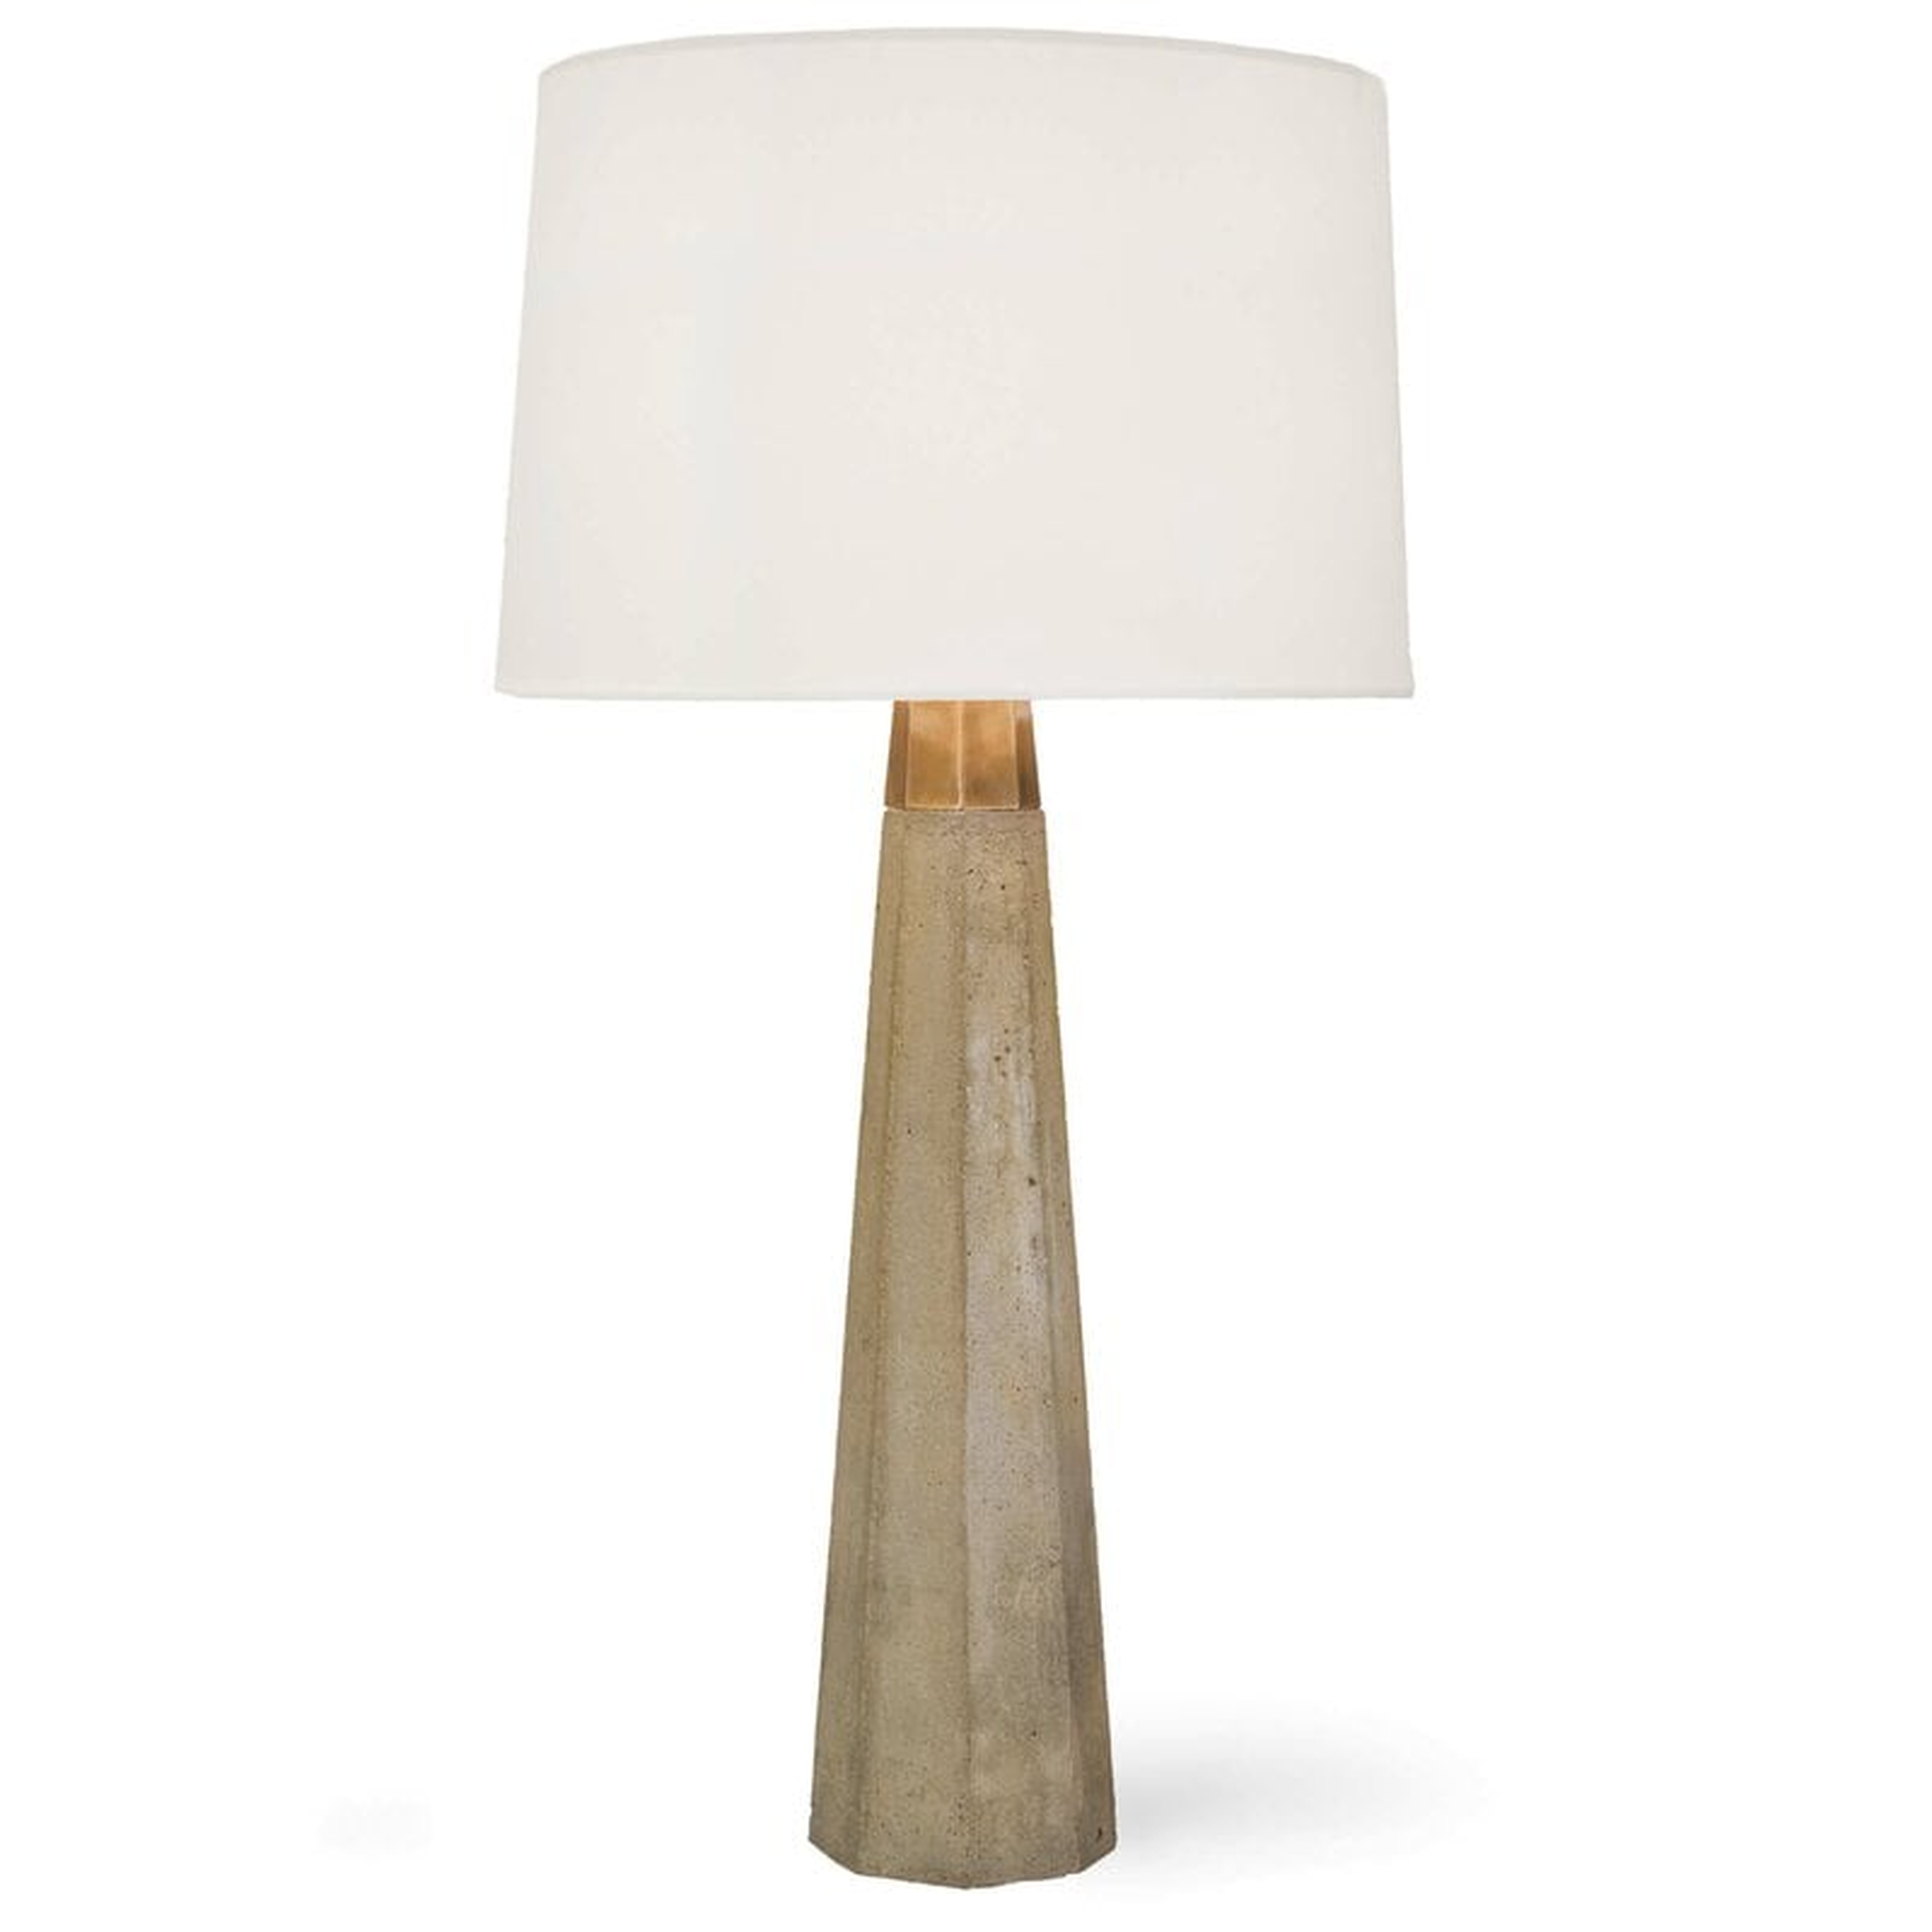 Regina Andrew Beretta Concrete Table Lamp - Perigold